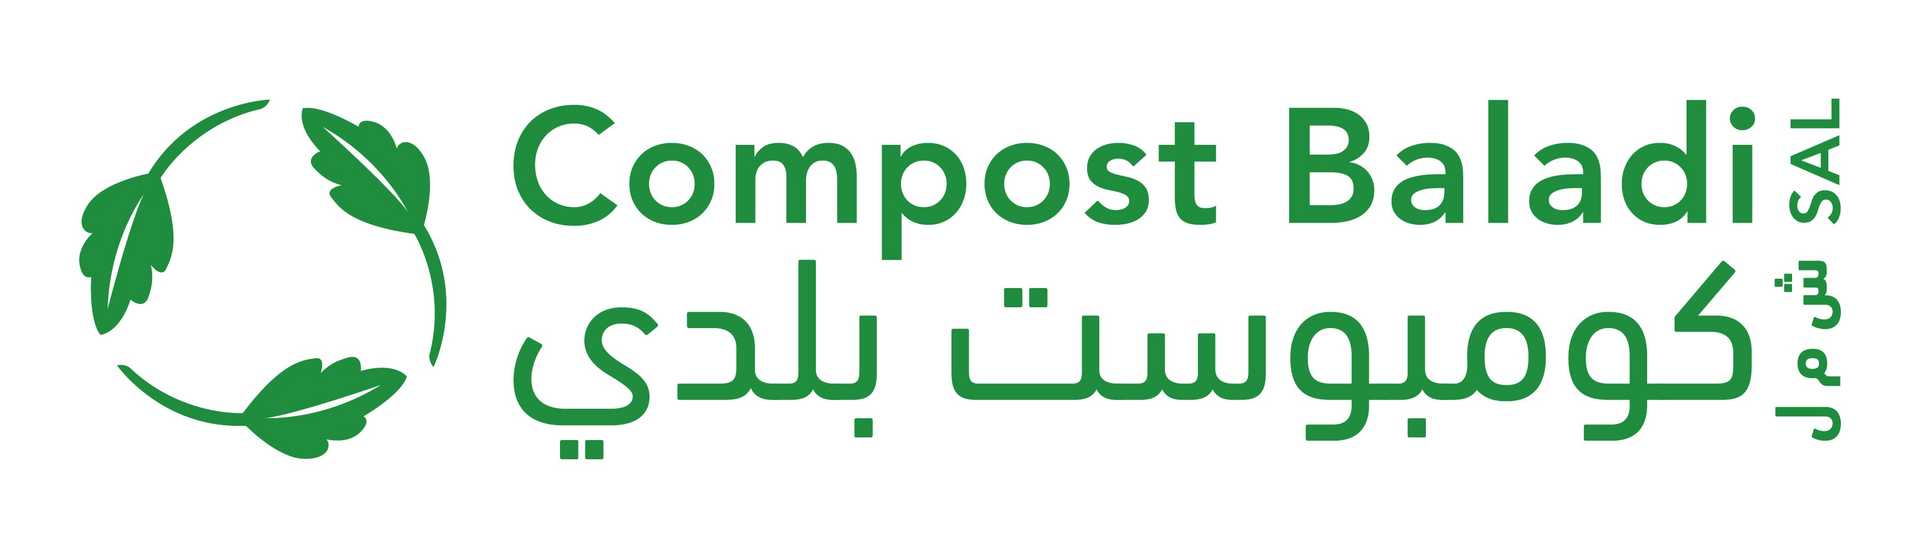 Compost Baladi logo